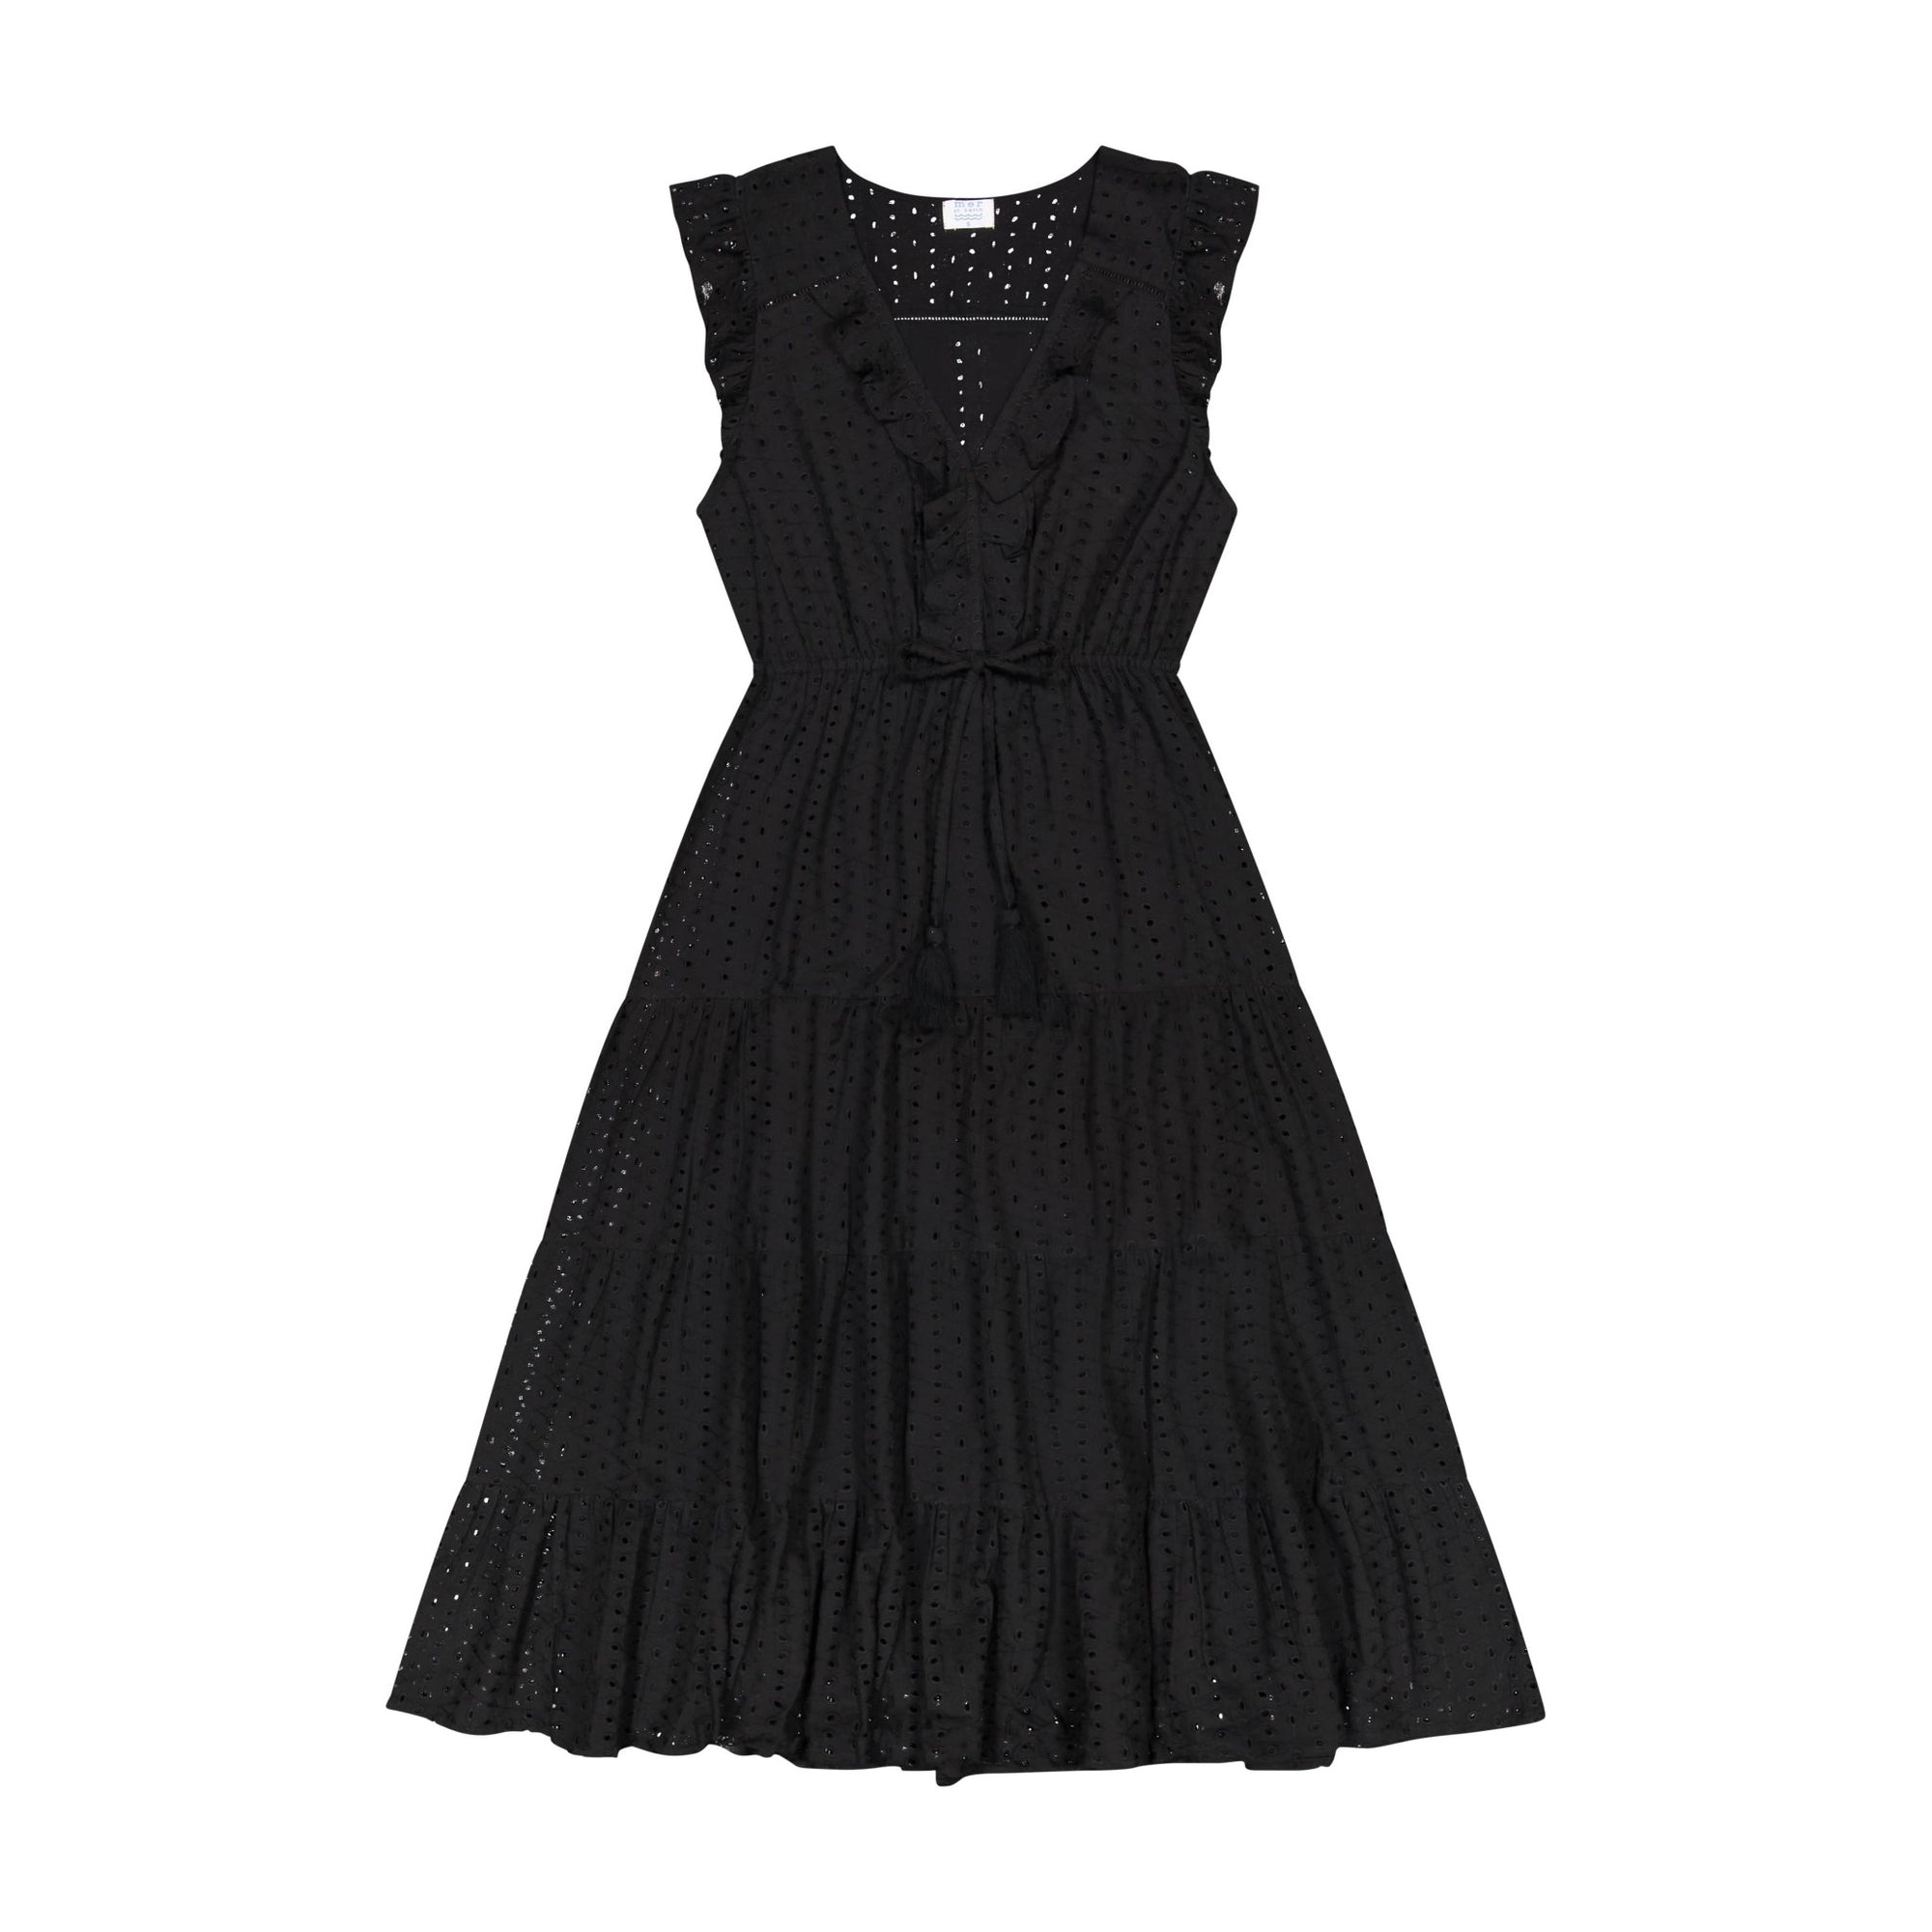 Giselle Women's Maxi Dress Black Eyelet - Abigail Fox Designs